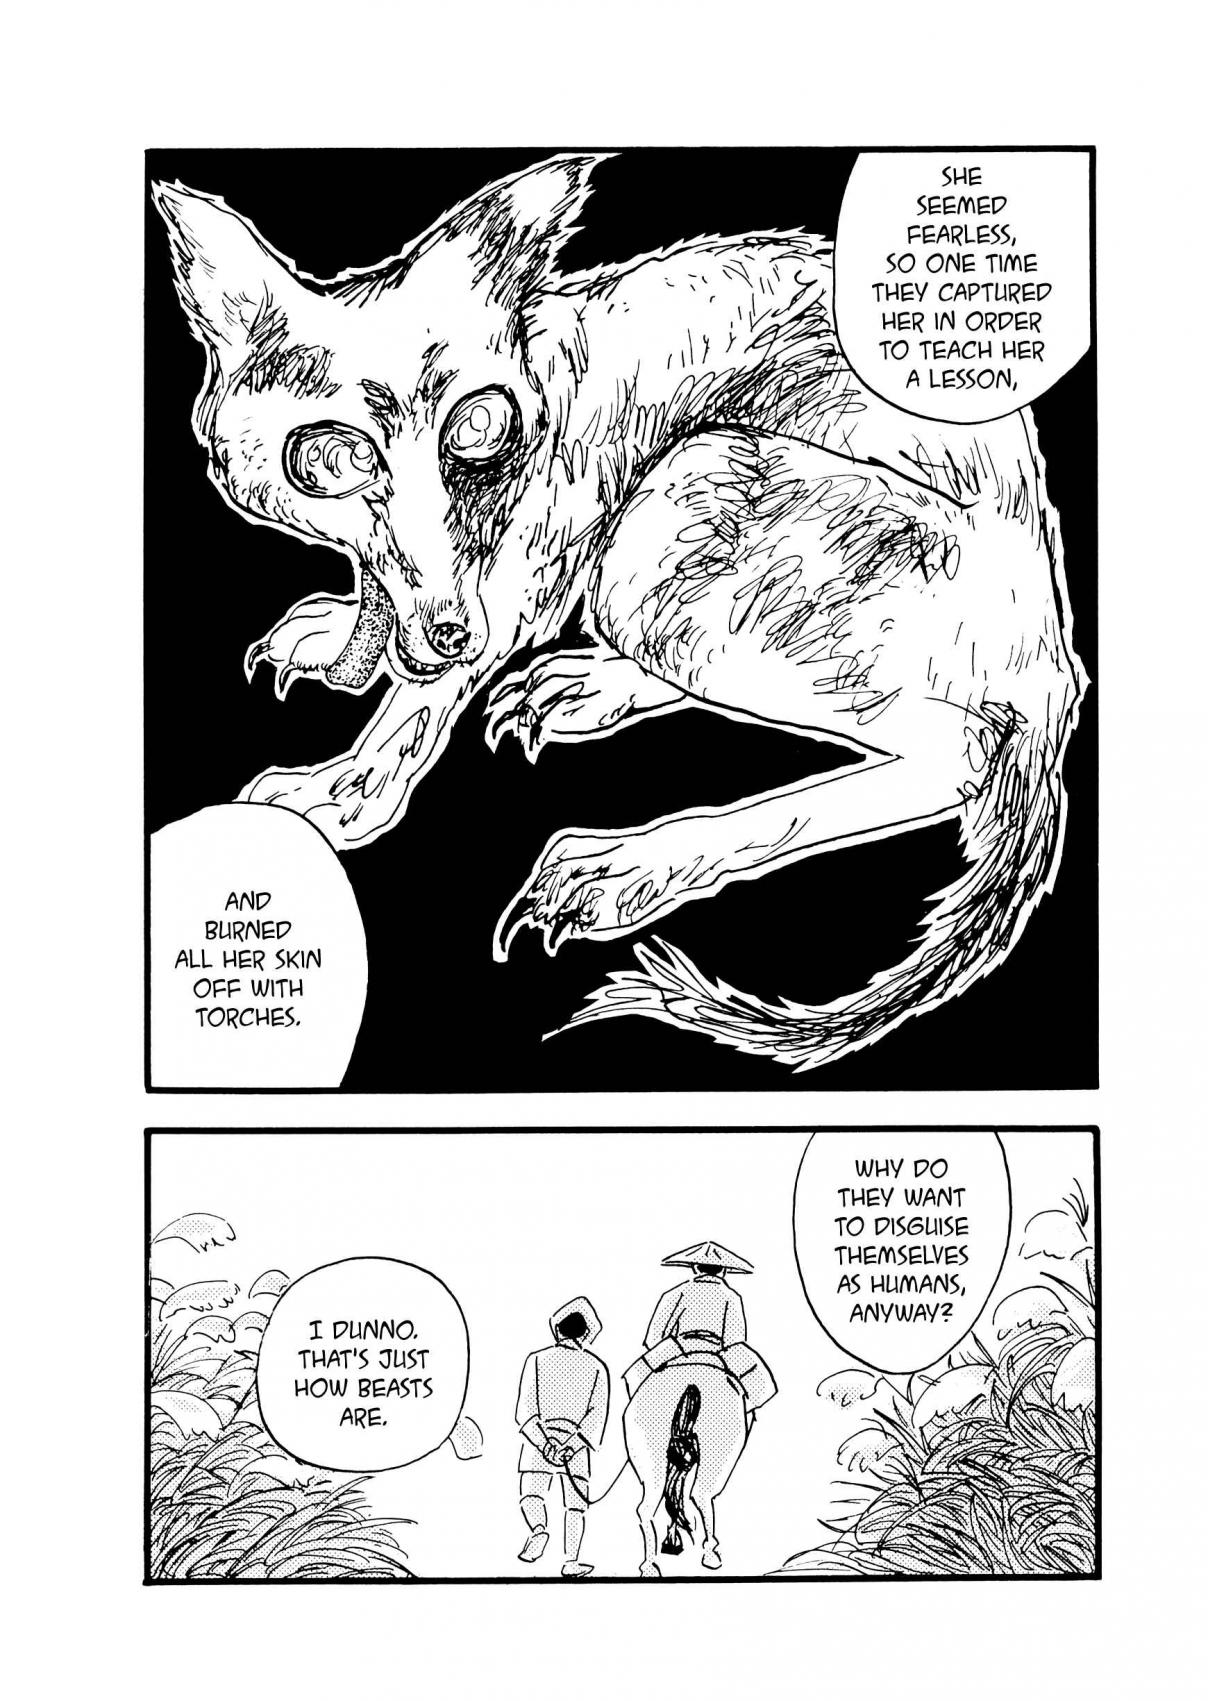 Hyaku Monogatari Vol. 1 Ch. 48 49 Two Stories About Beasts Who Transform into Humans